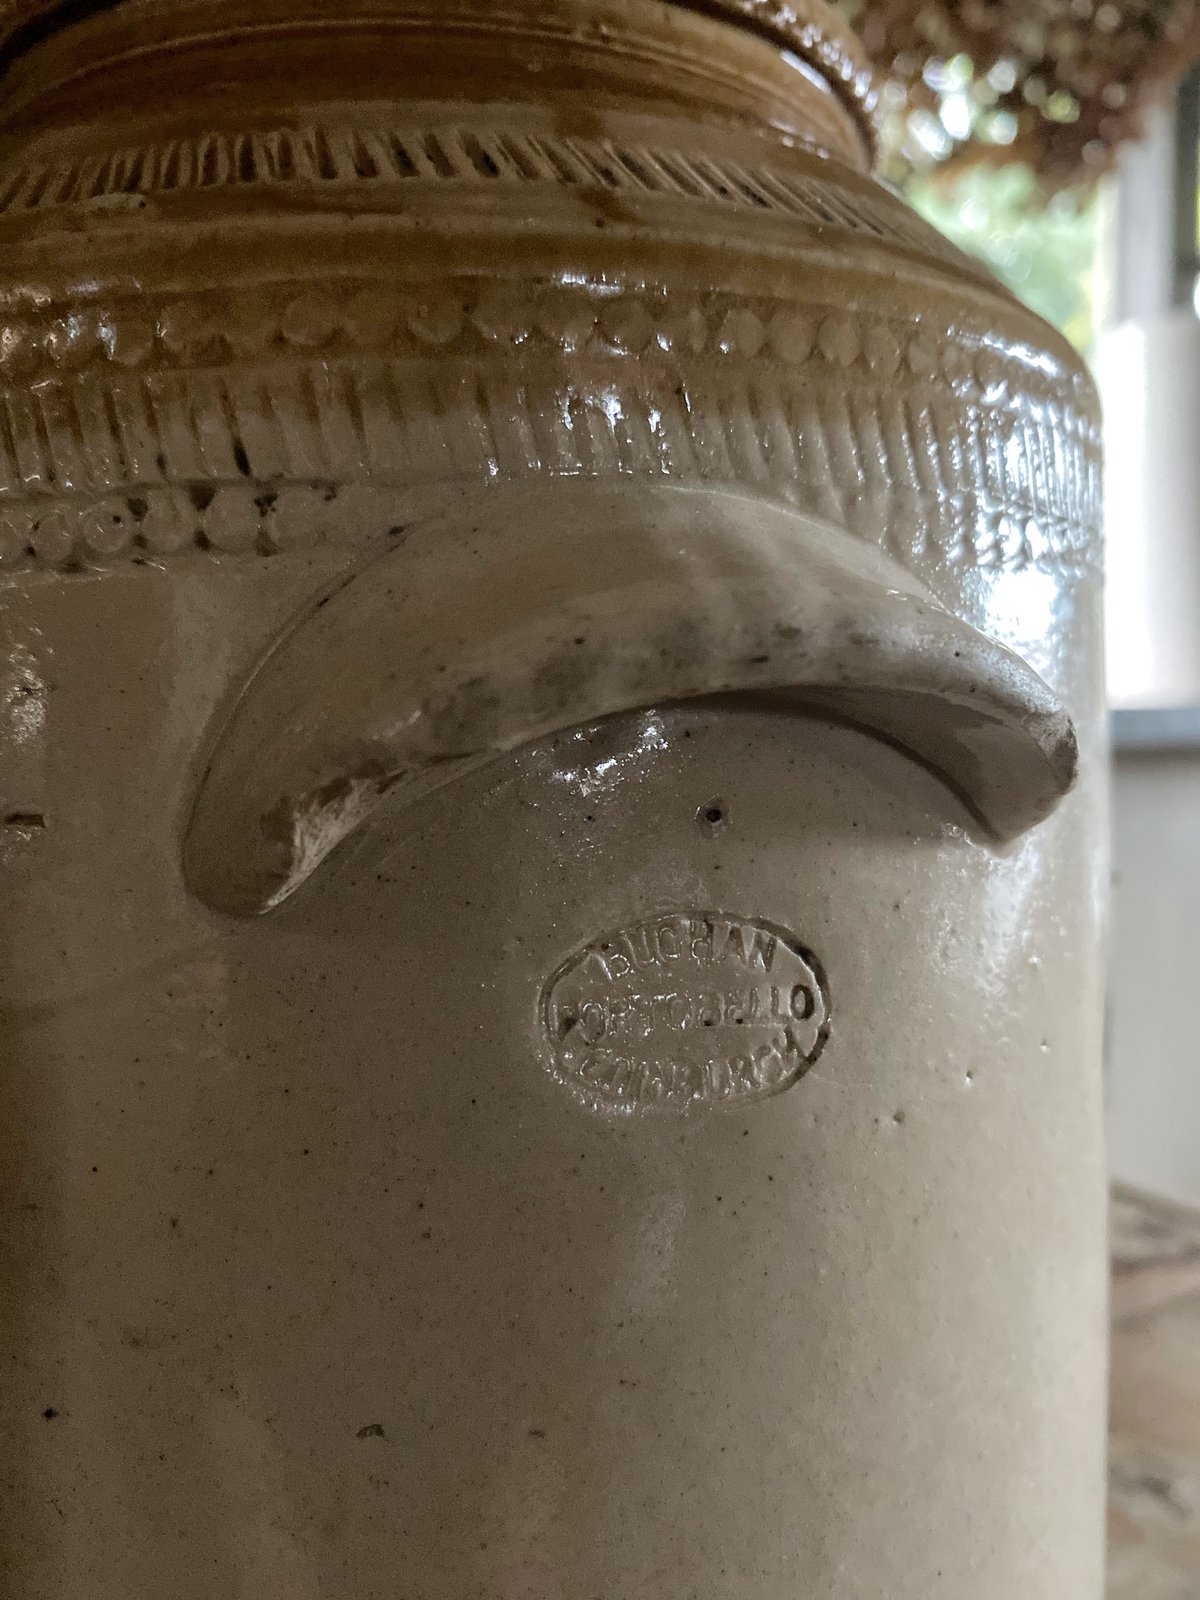 Image of Pair of Buchan Portobello storage jars